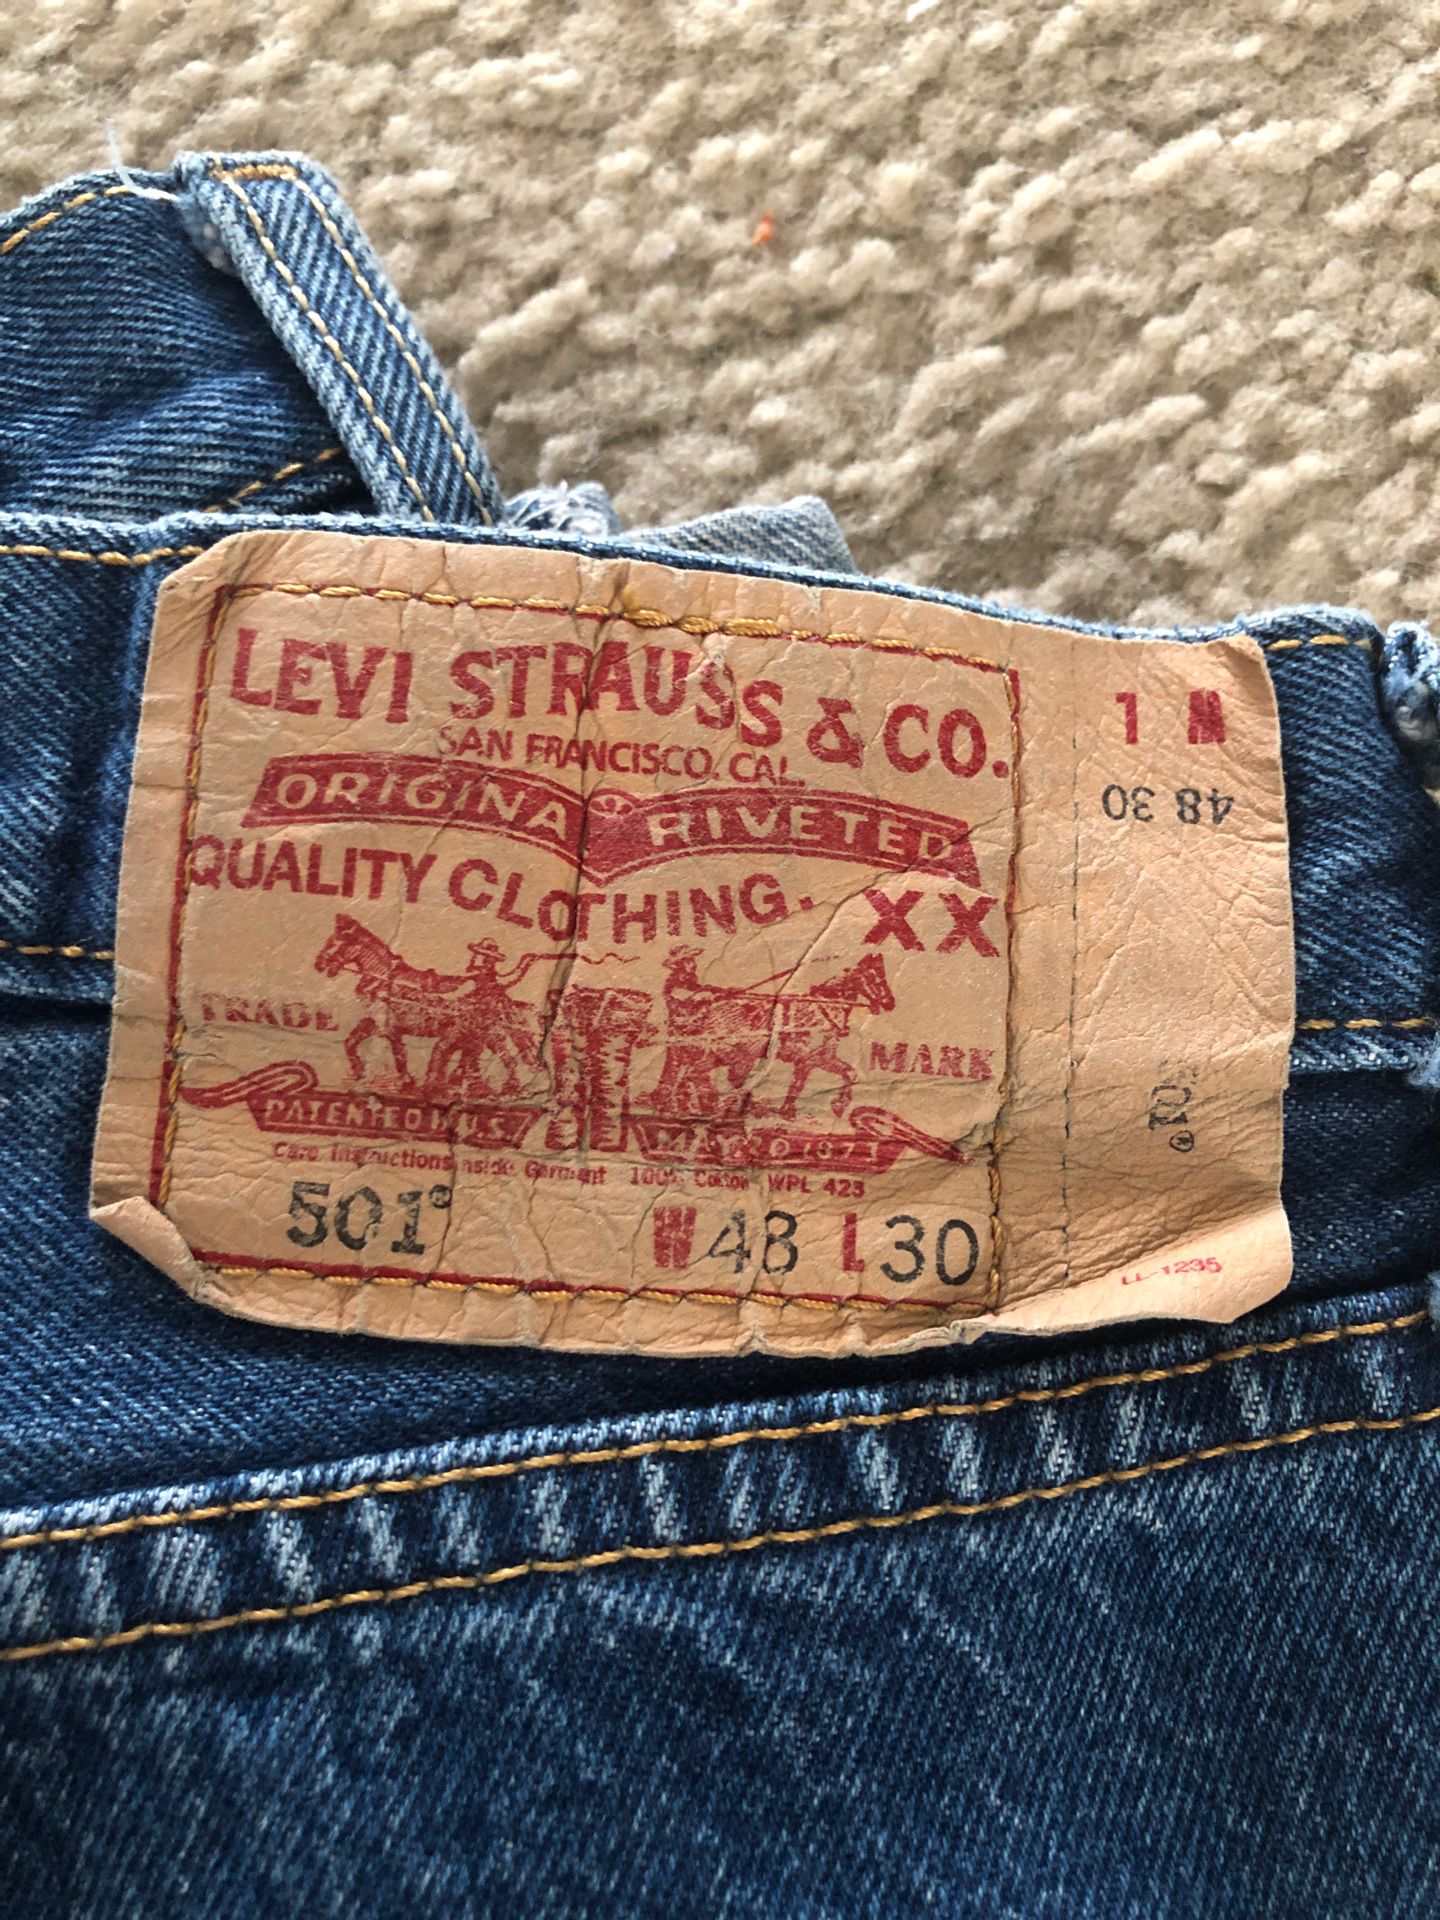 501 Levi Strauss blue color jeans